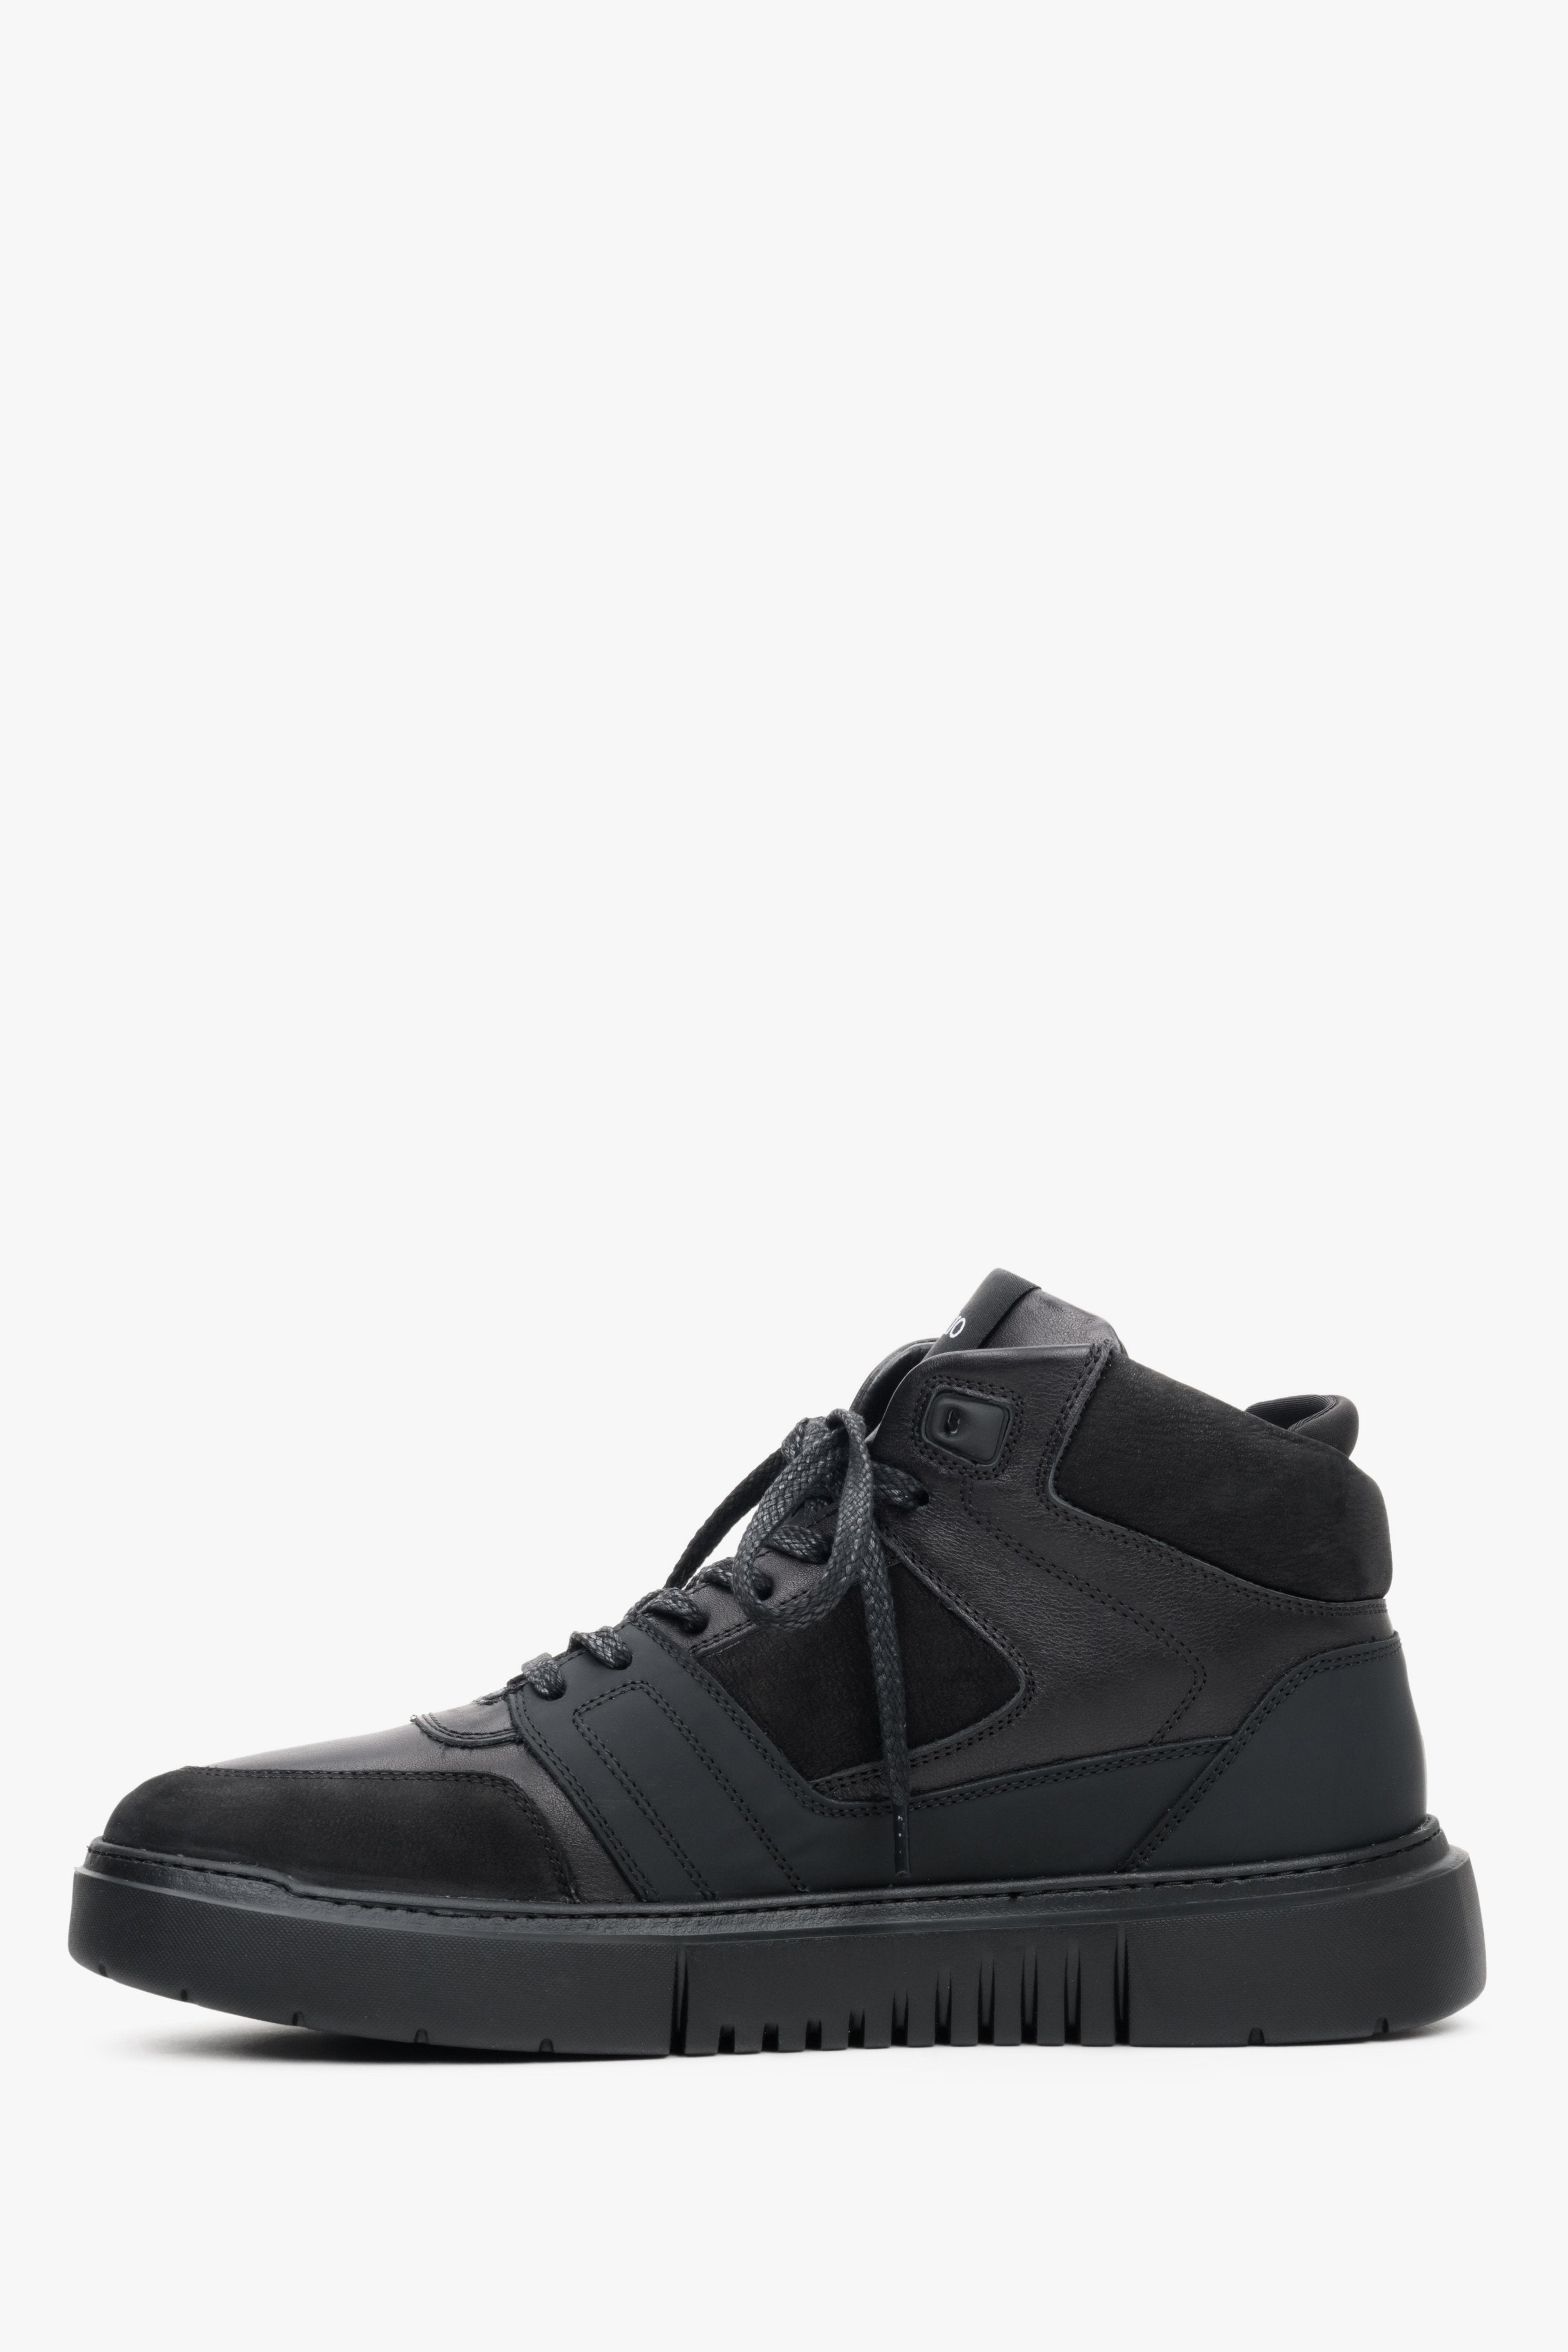 Czarne, wysokie sneakersy męskie ze skóry naturalnej marki Estro - profil buta.